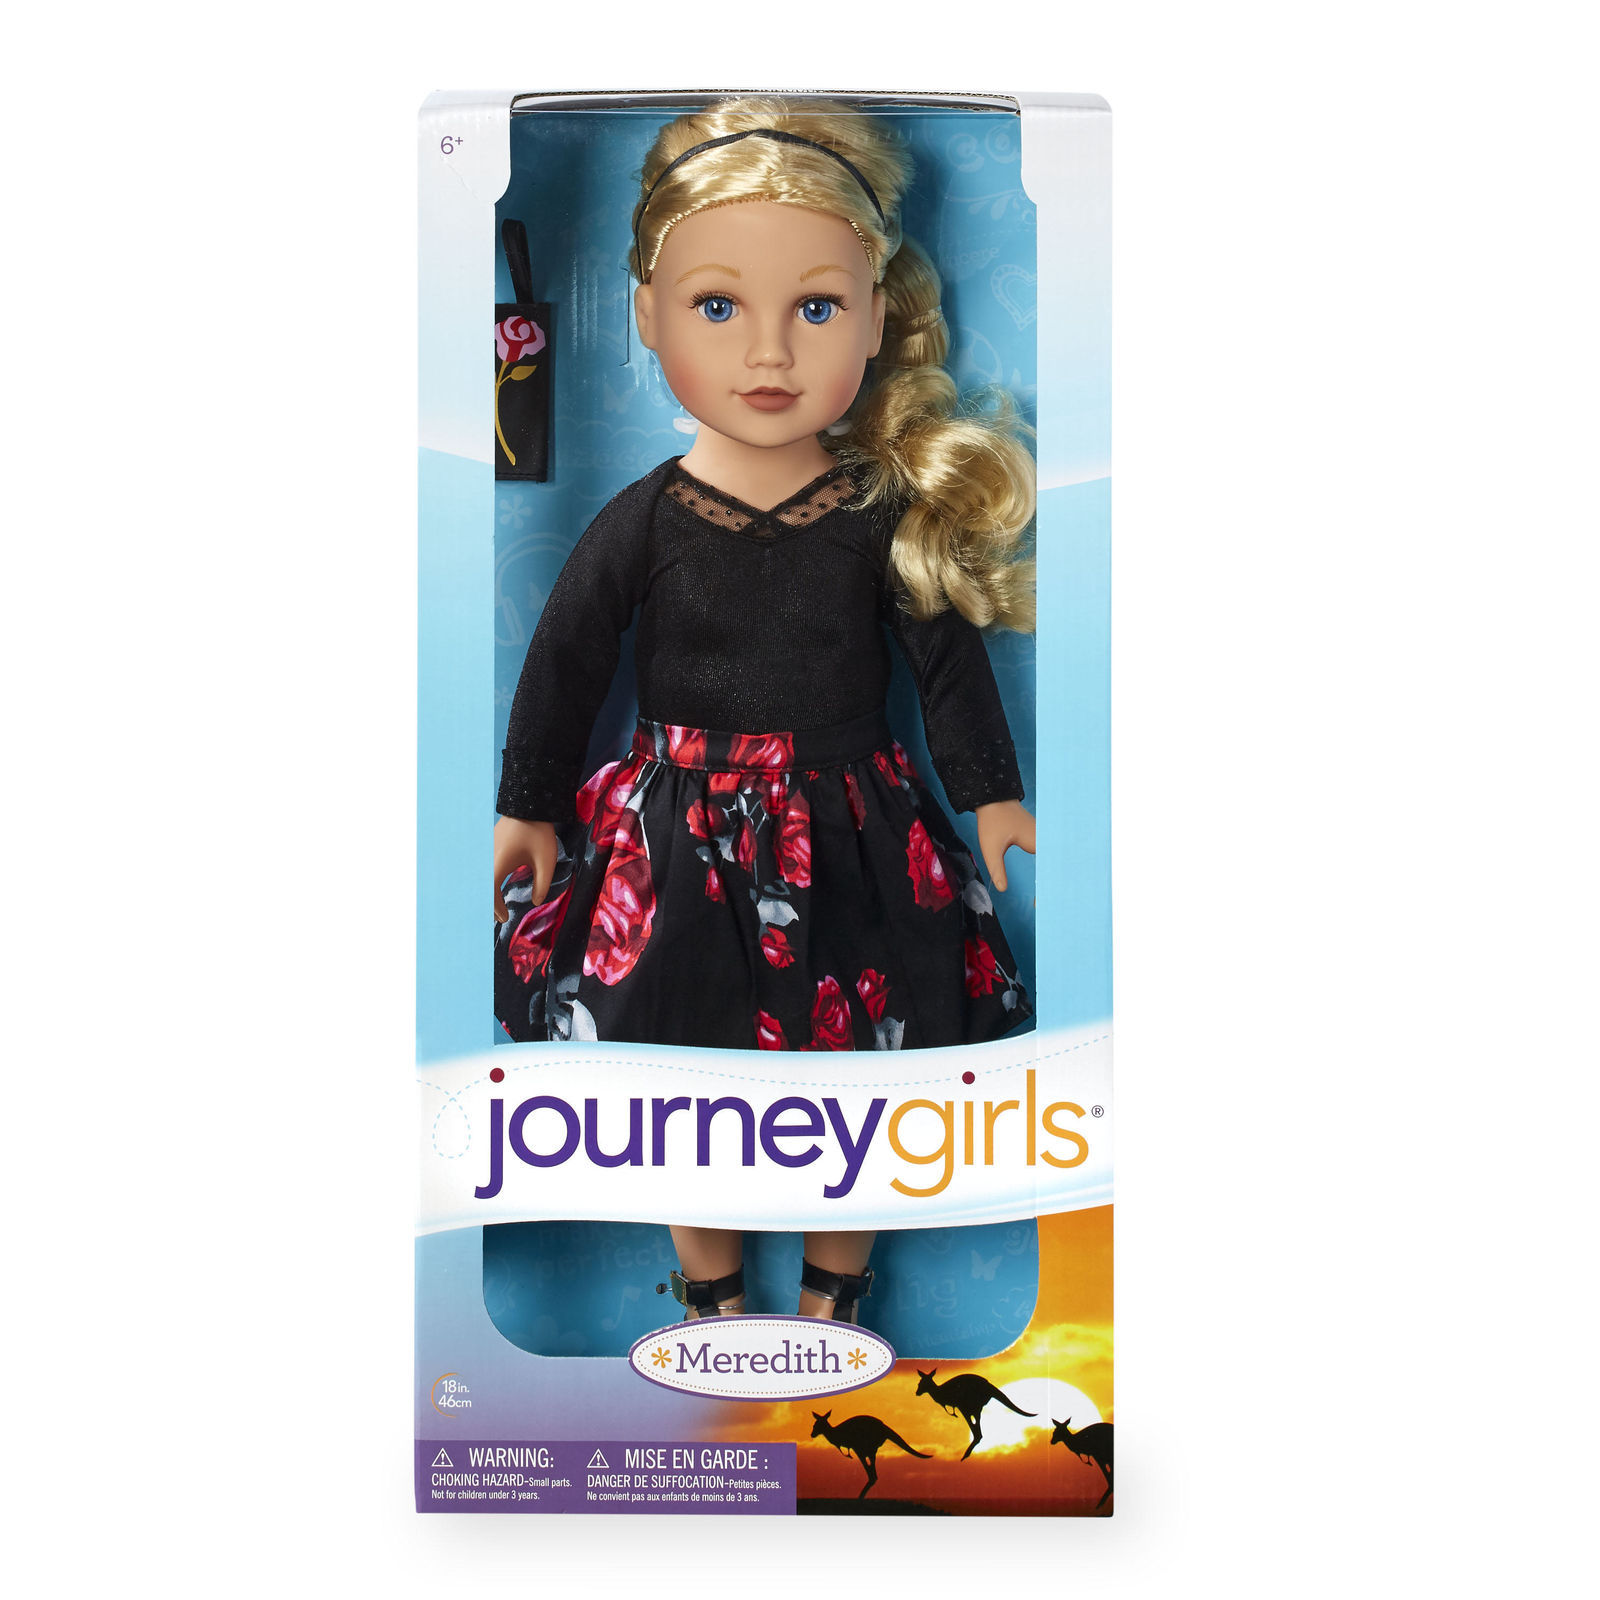 journey girl items